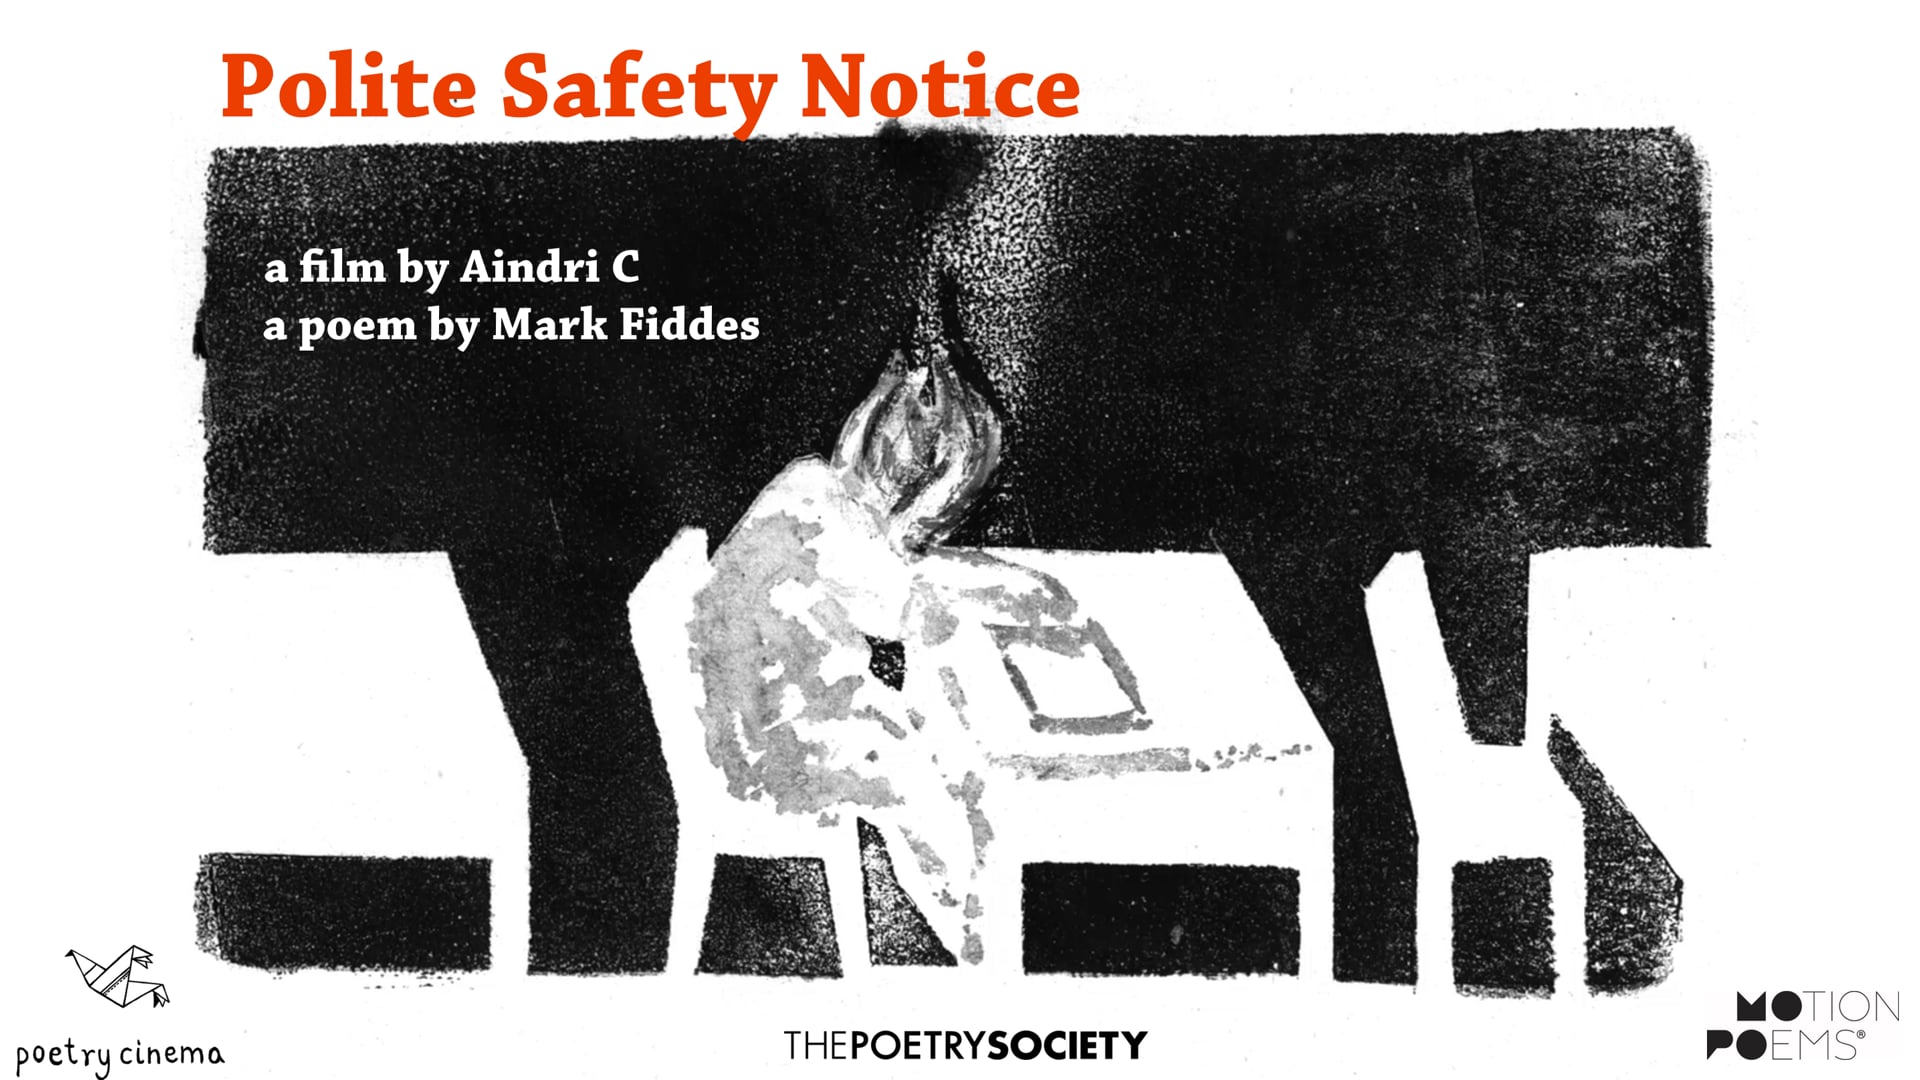 Polite Safety Notice | Poem by Mark Fiddes | Film by Aindri C